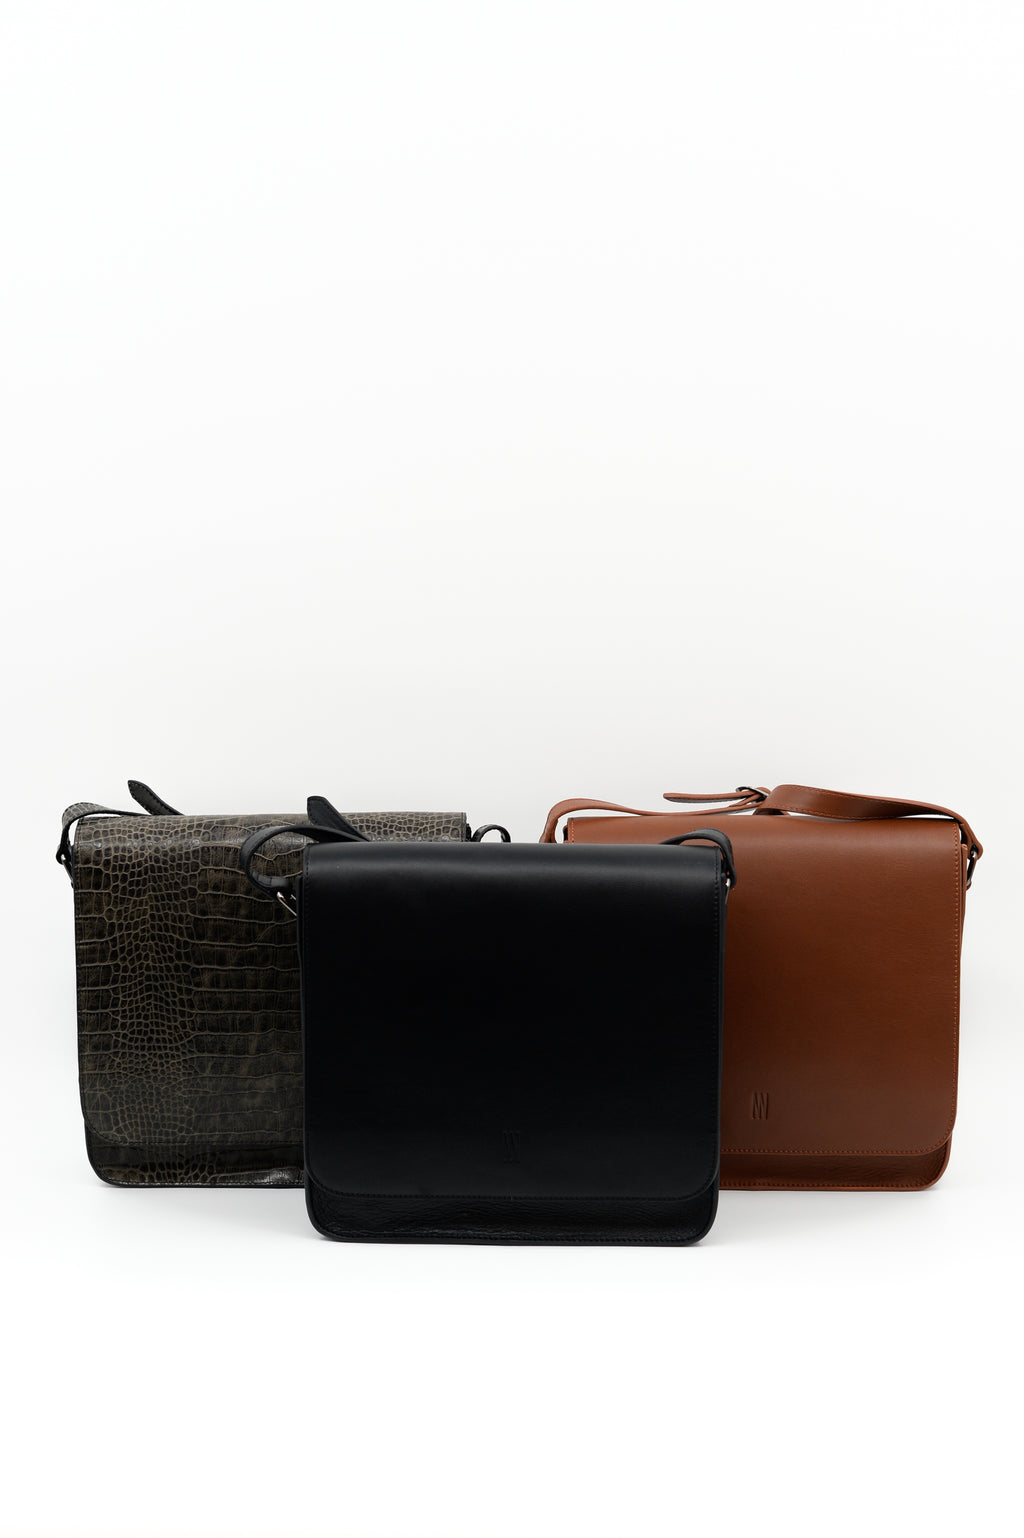 Medium crossbody handbag in croco black olive